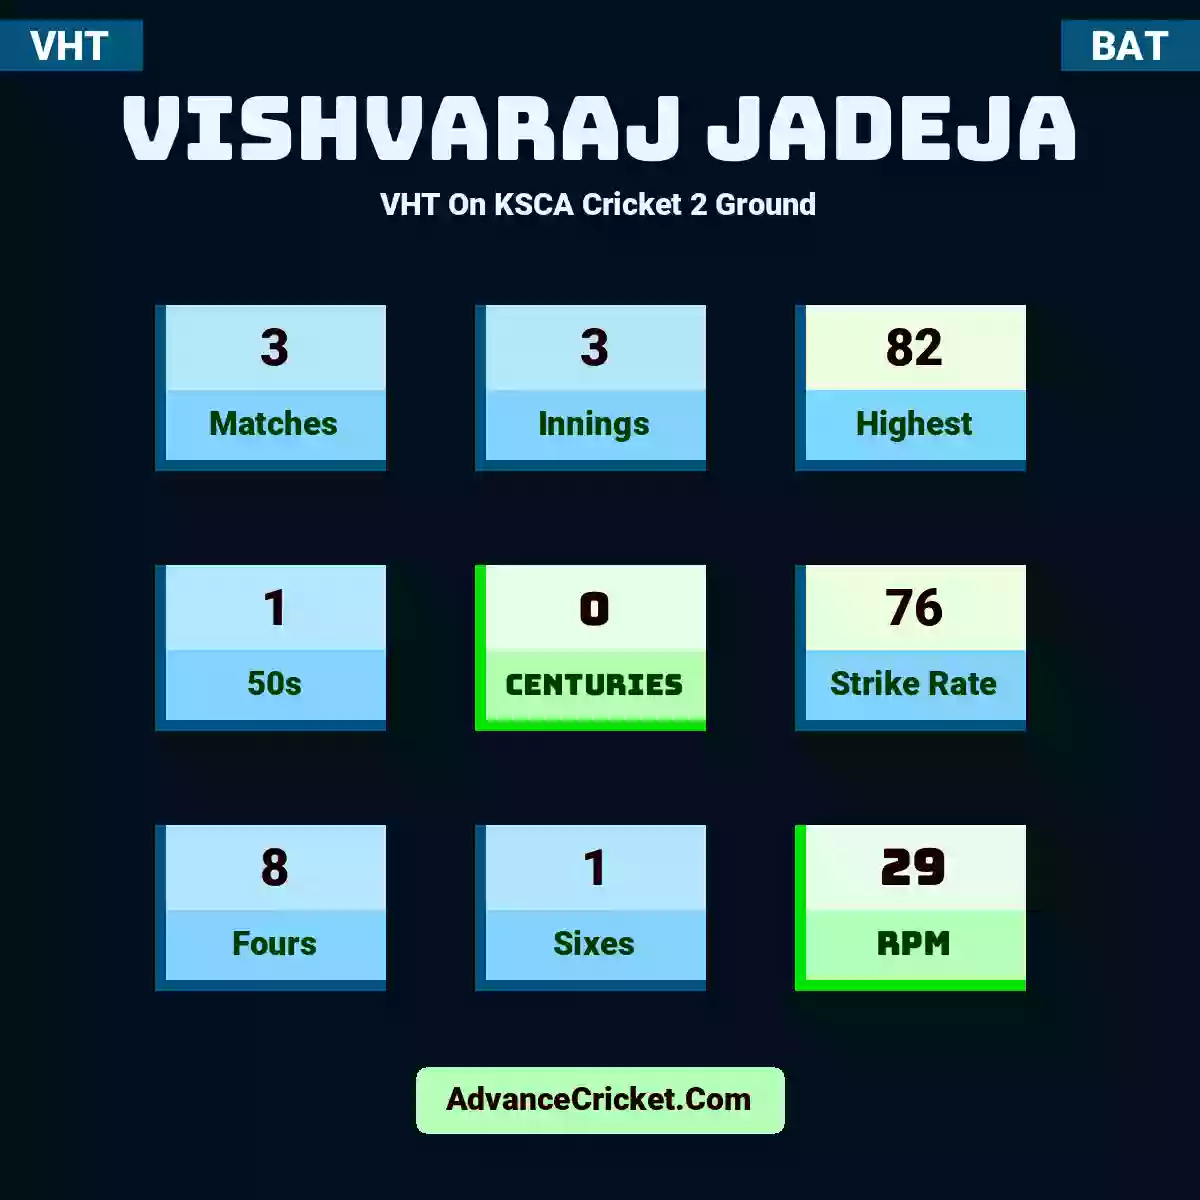 Vishvaraj Jadeja VHT  On KSCA Cricket 2 Ground, Vishvaraj Jadeja played 3 matches, scored 82 runs as highest, 1 half-centuries, and 0 centuries, with a strike rate of 76. V.Jadeja hit 8 fours and 1 sixes, with an RPM of 29.